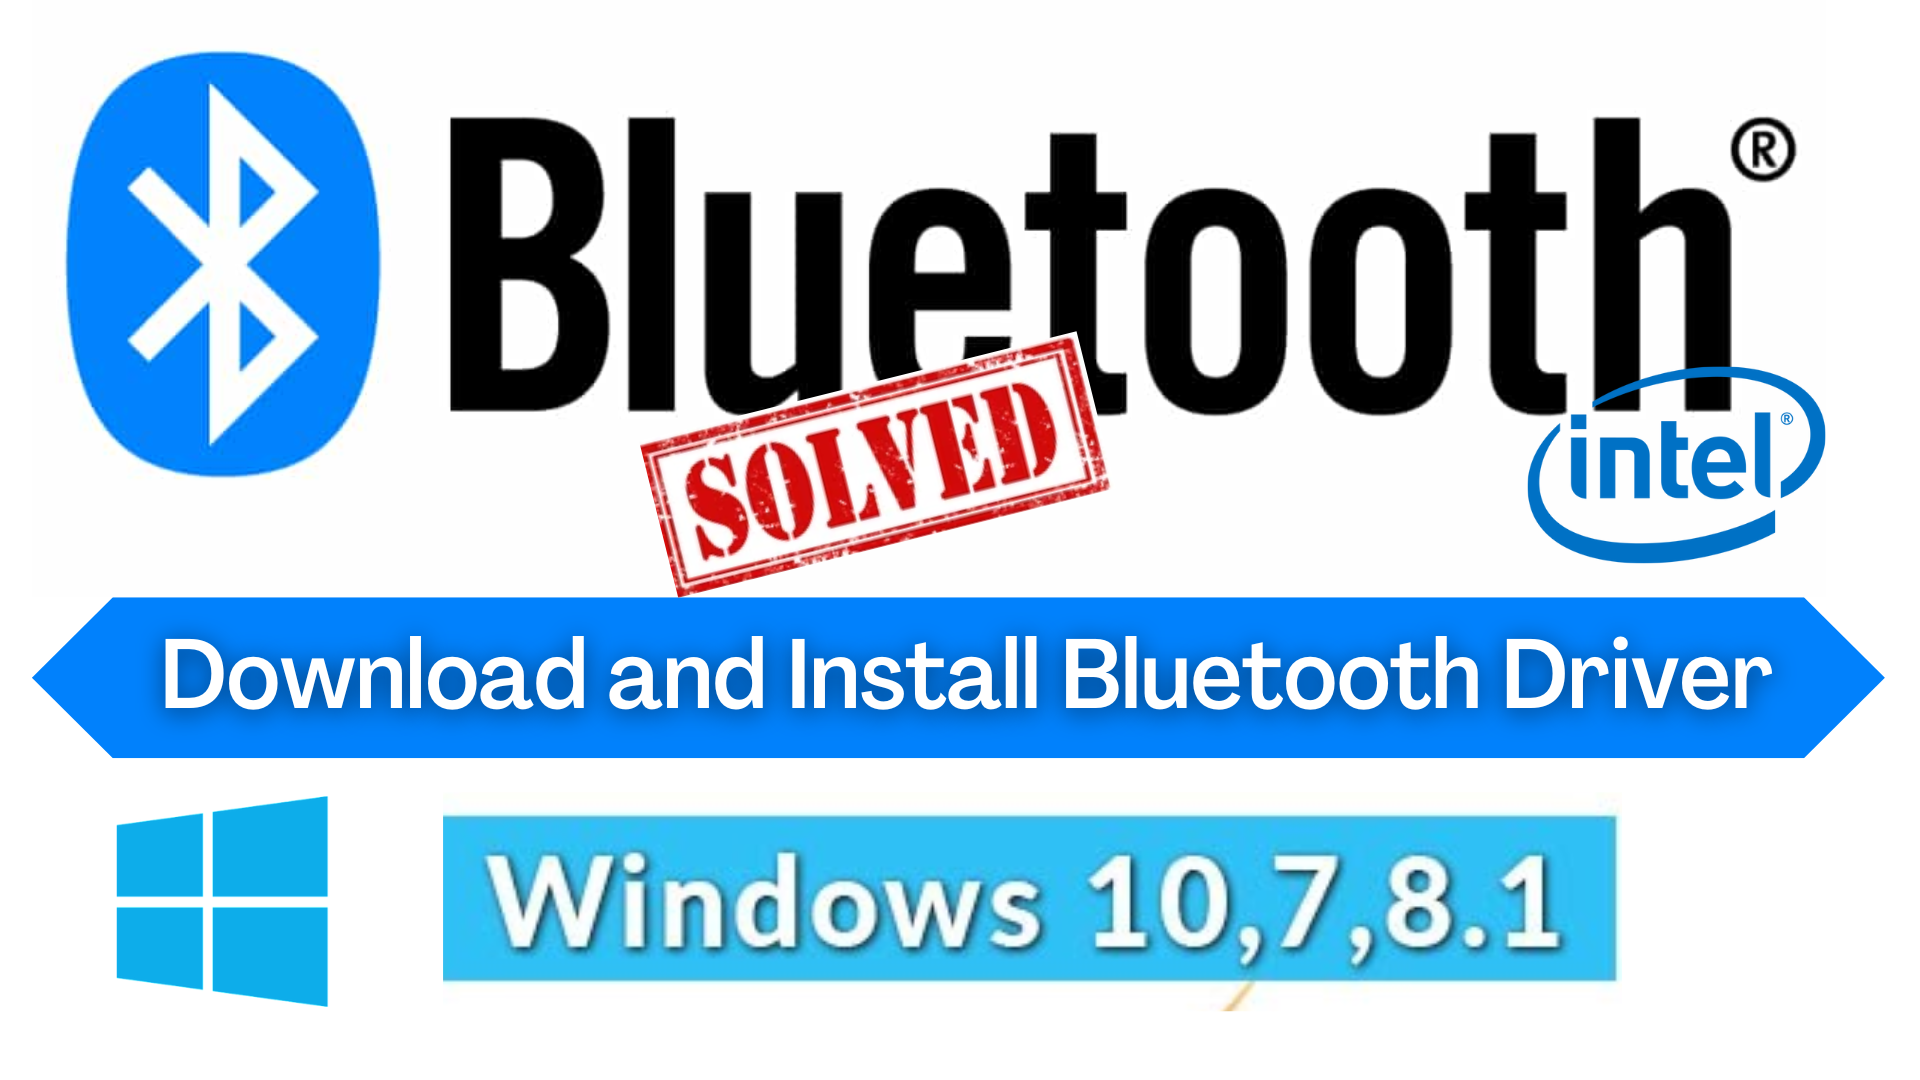 Блютуз интел. Intel Bluetooth. How download Bluetooth. Bluetooth Suite.